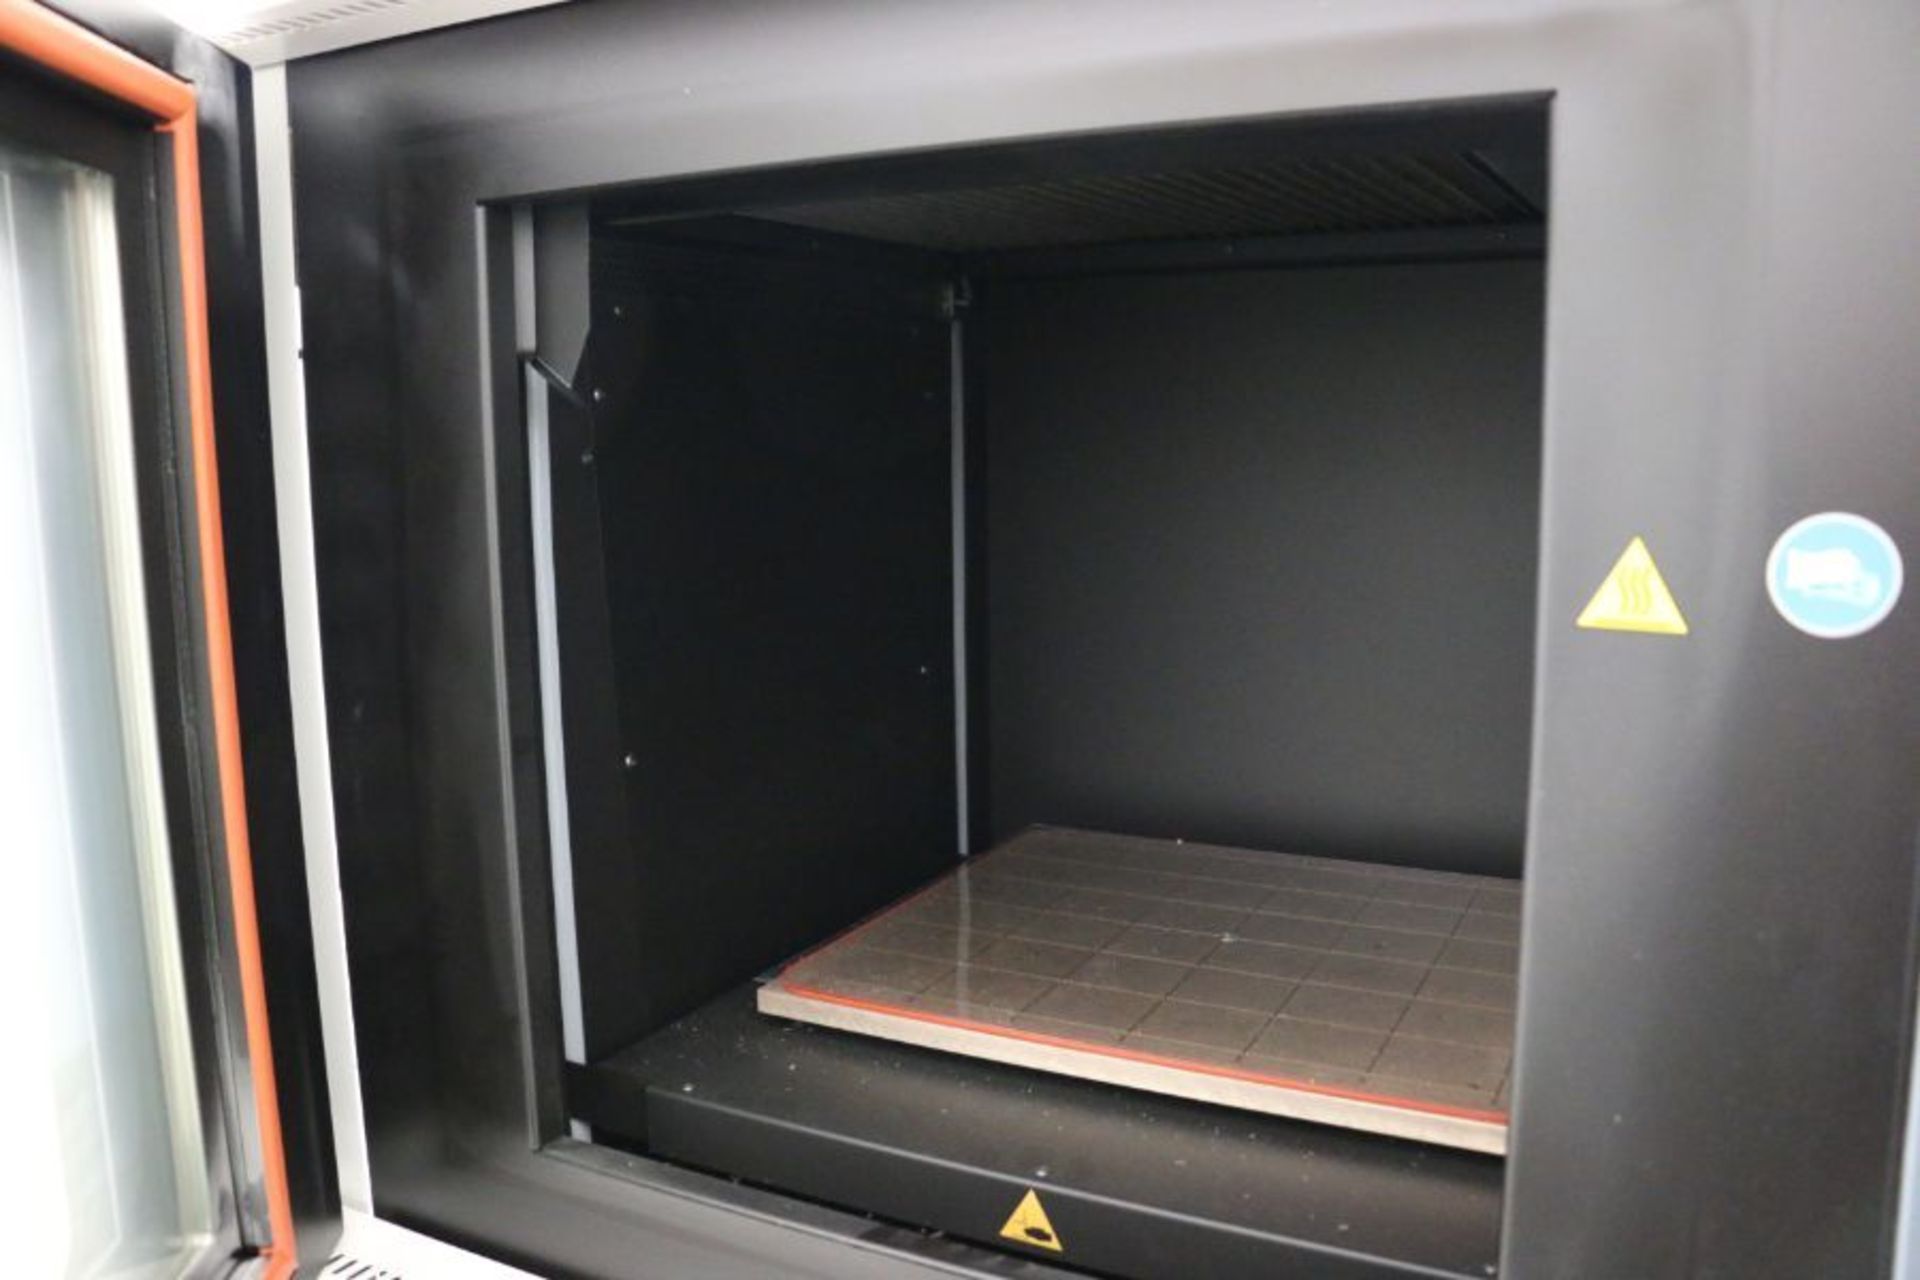 Fortus 400mc 3D Printer, FDM type, 16” x 14” x 16” envelope, PC & ULTEM Material Option, New 2014 - Image 3 of 4